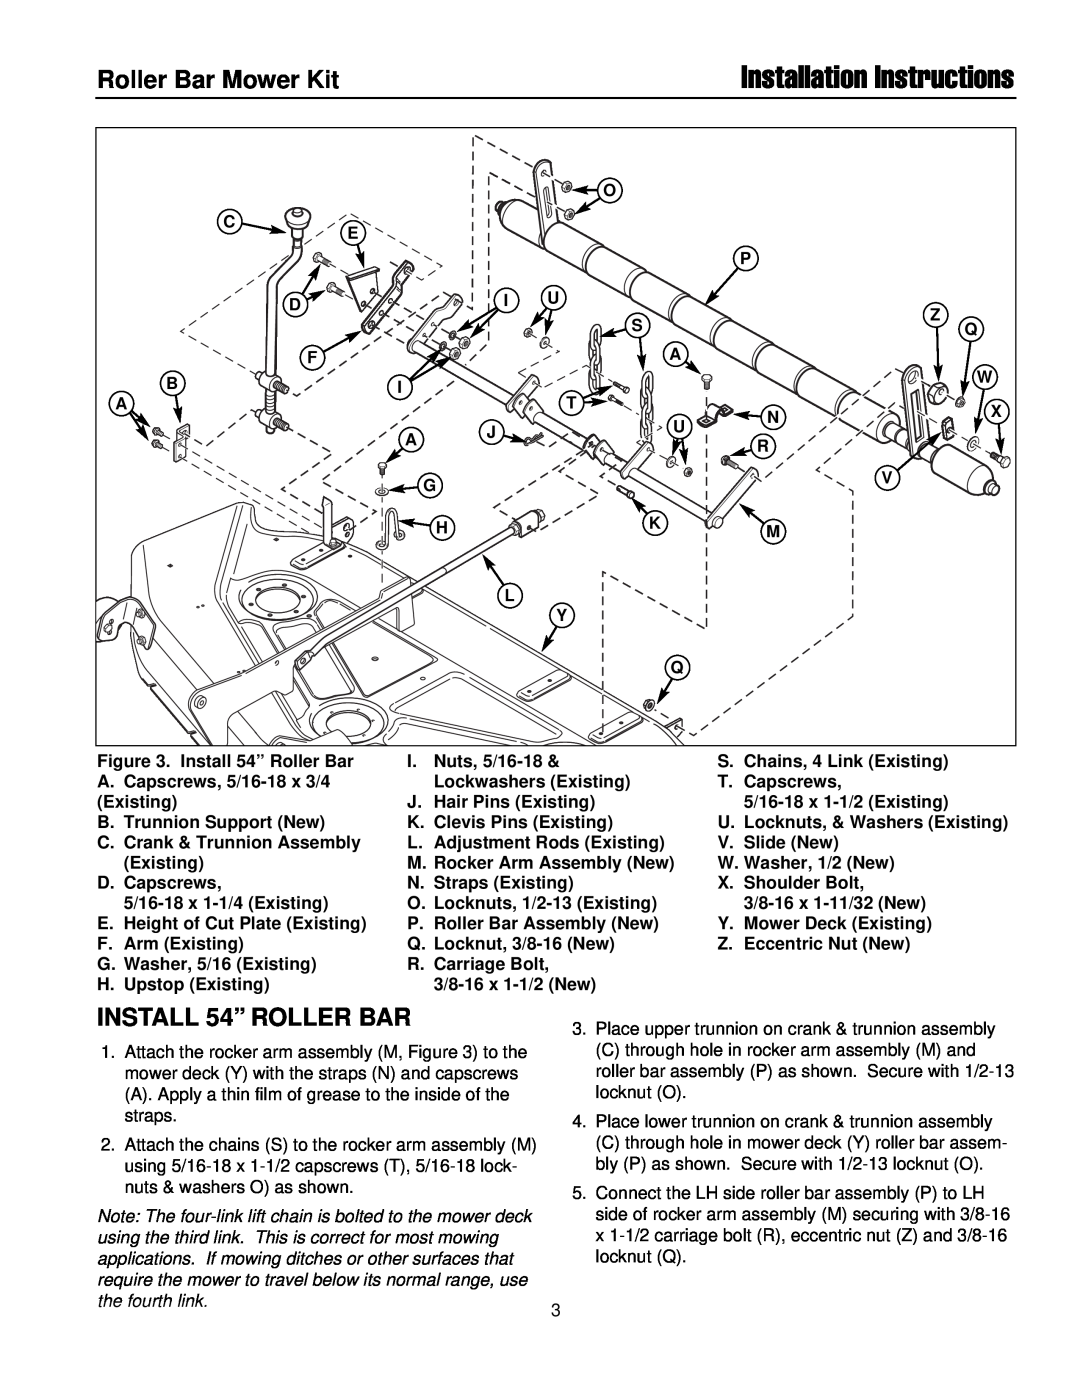 Briggs & Stratton 1687079 installation instructions INSTALL 54” ROLLER BAR, Installation Instructions, Roller Bar Mower Kit 